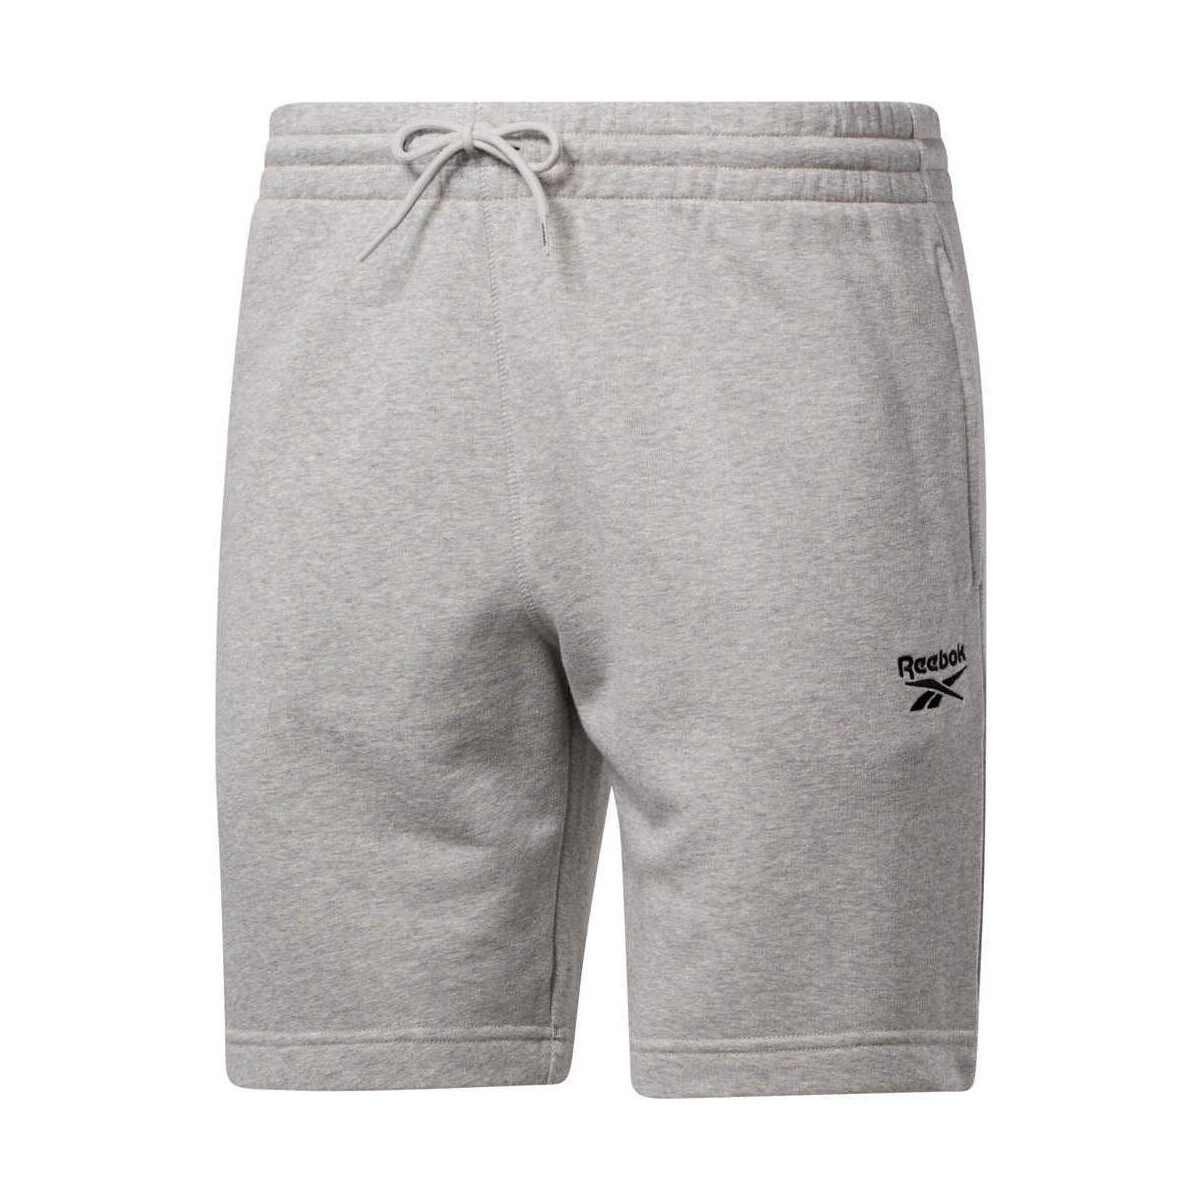 textil Hombre Shorts / Bermudas Reebok Sport RI FT SHORT Gris